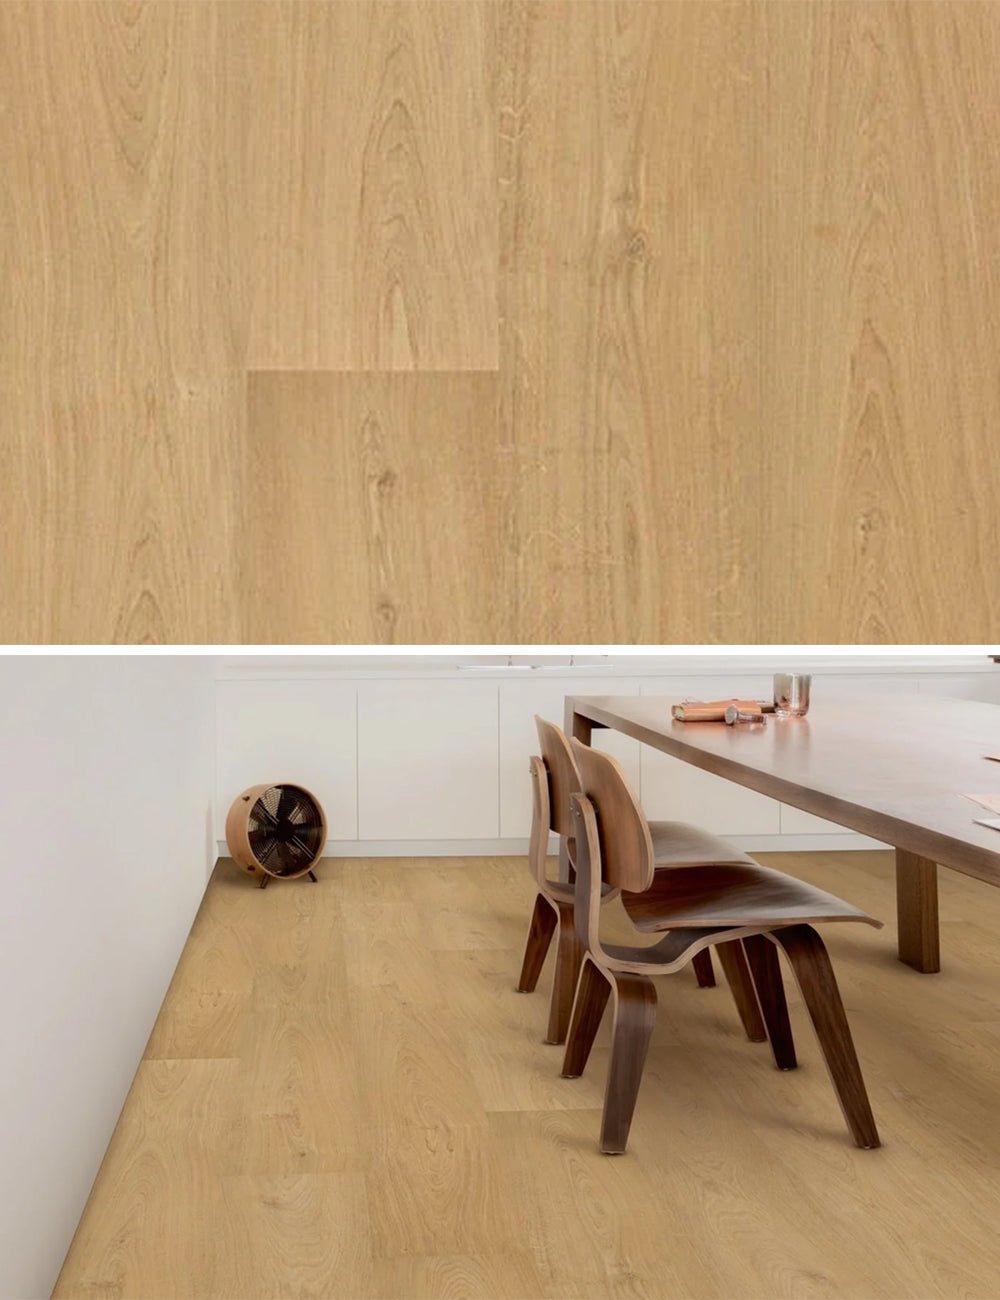 Floorify Long Plank Click PVC Croissant F007 - Solza.fr